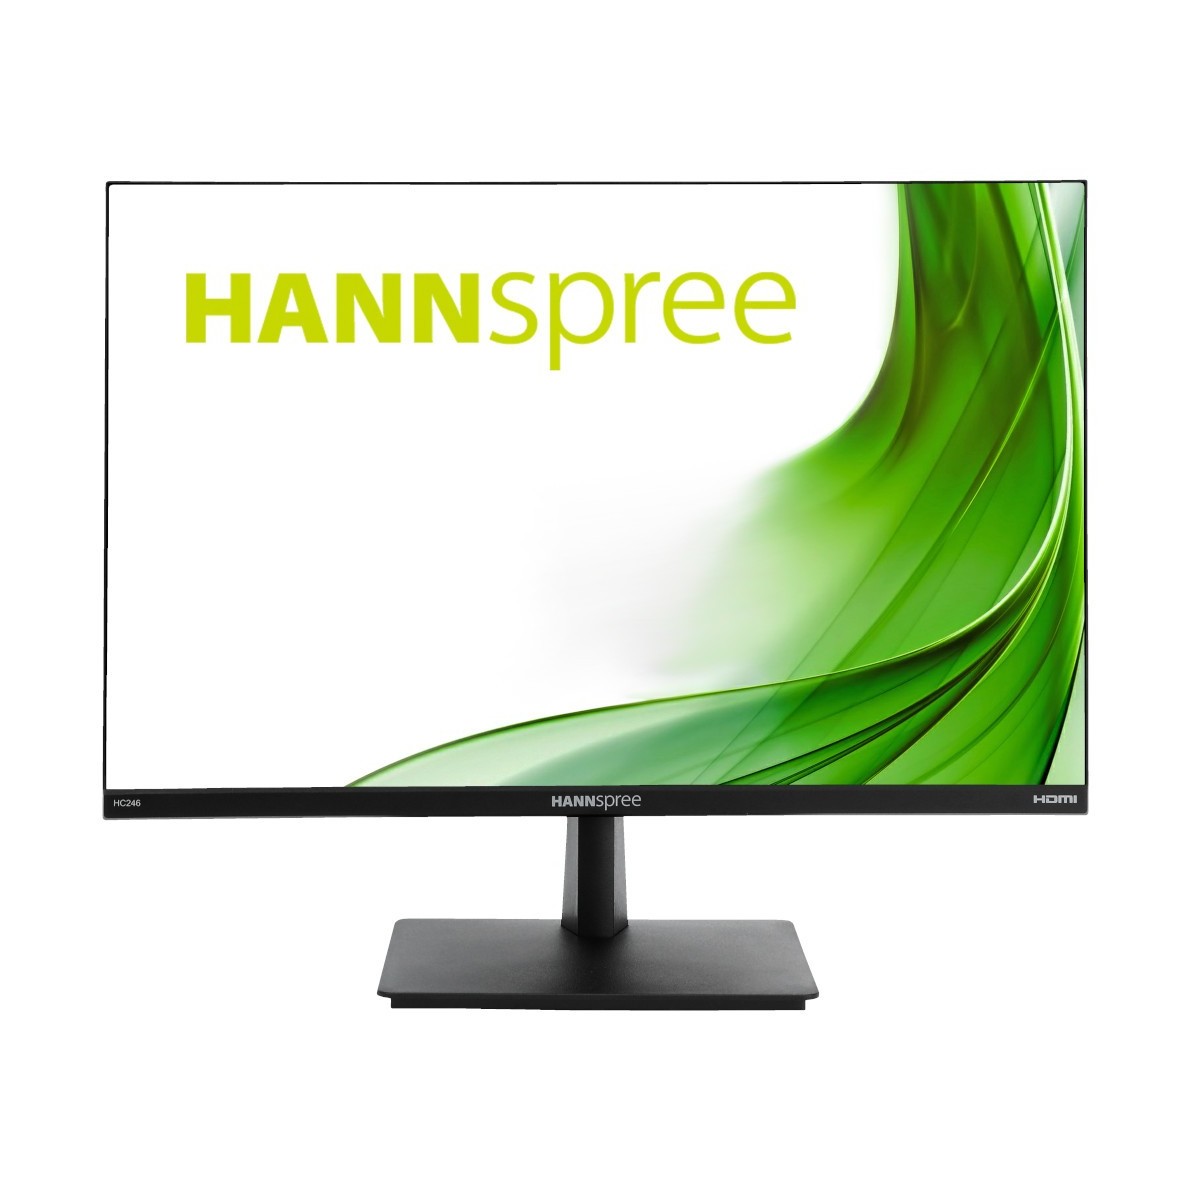 Hannspree MONITOR HANNSPREE LCD LED 24" Wide FRAMELESS HC246PFB 5ms MM FHD 1000:1 BLACK VGA HDMI DP Vesa